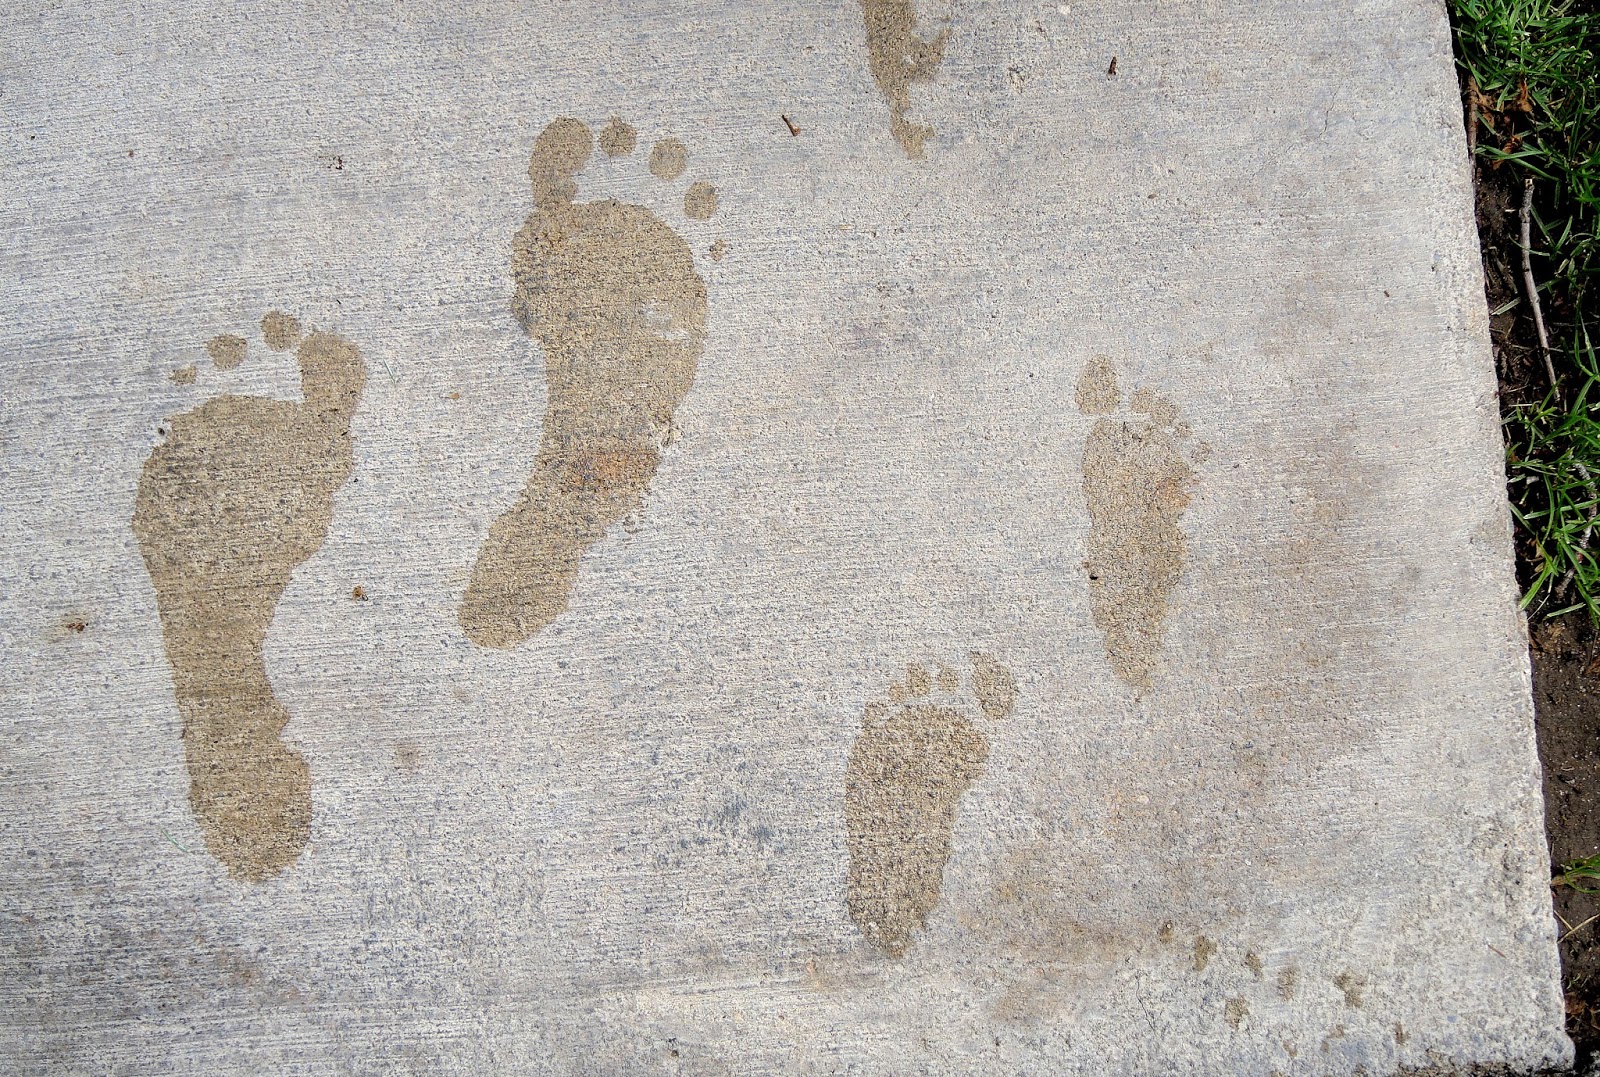 Grandma and Carter barefoot footprints.